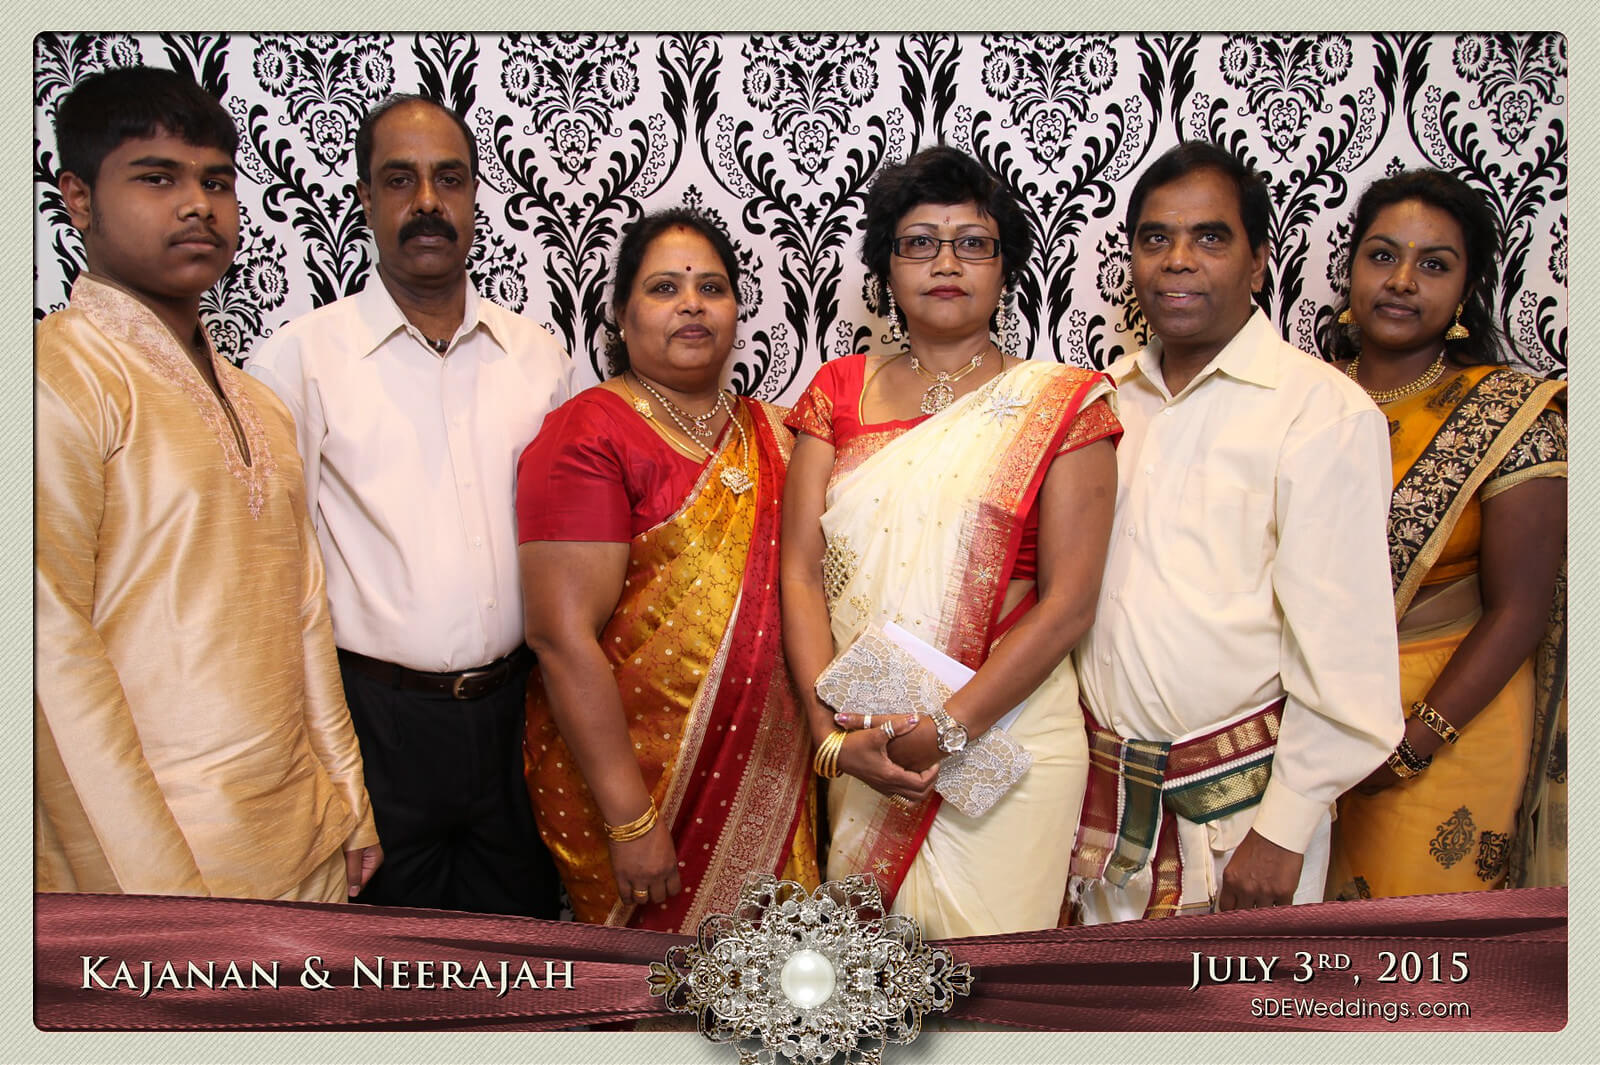 Toronto Scarborough Convention Centre Hindu Wedding Photo Booth Rental 7